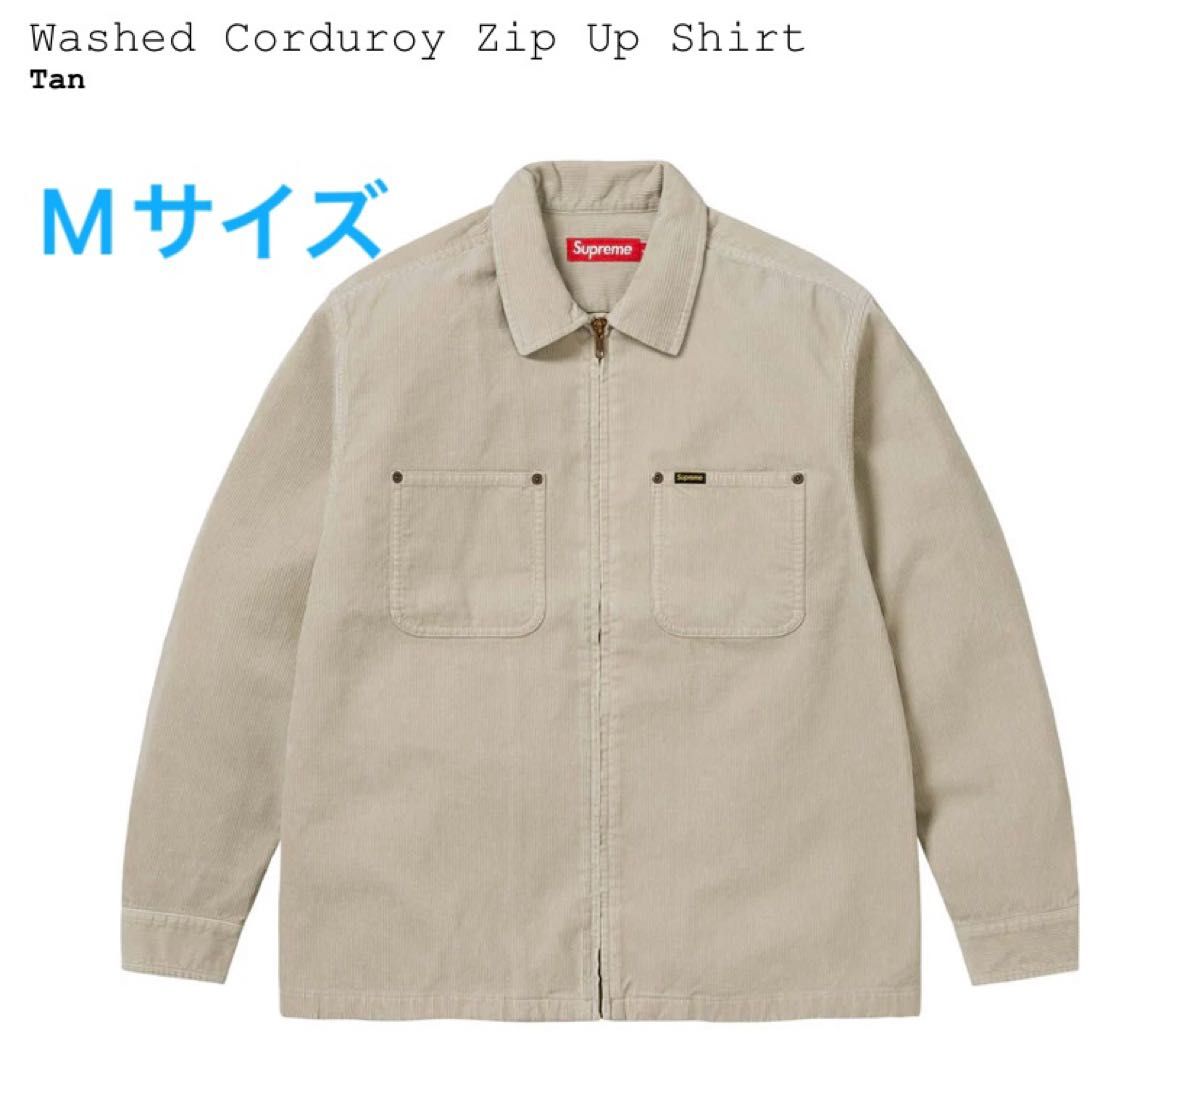 Supreme Washed Corduroy Zip Up Shirt TAN